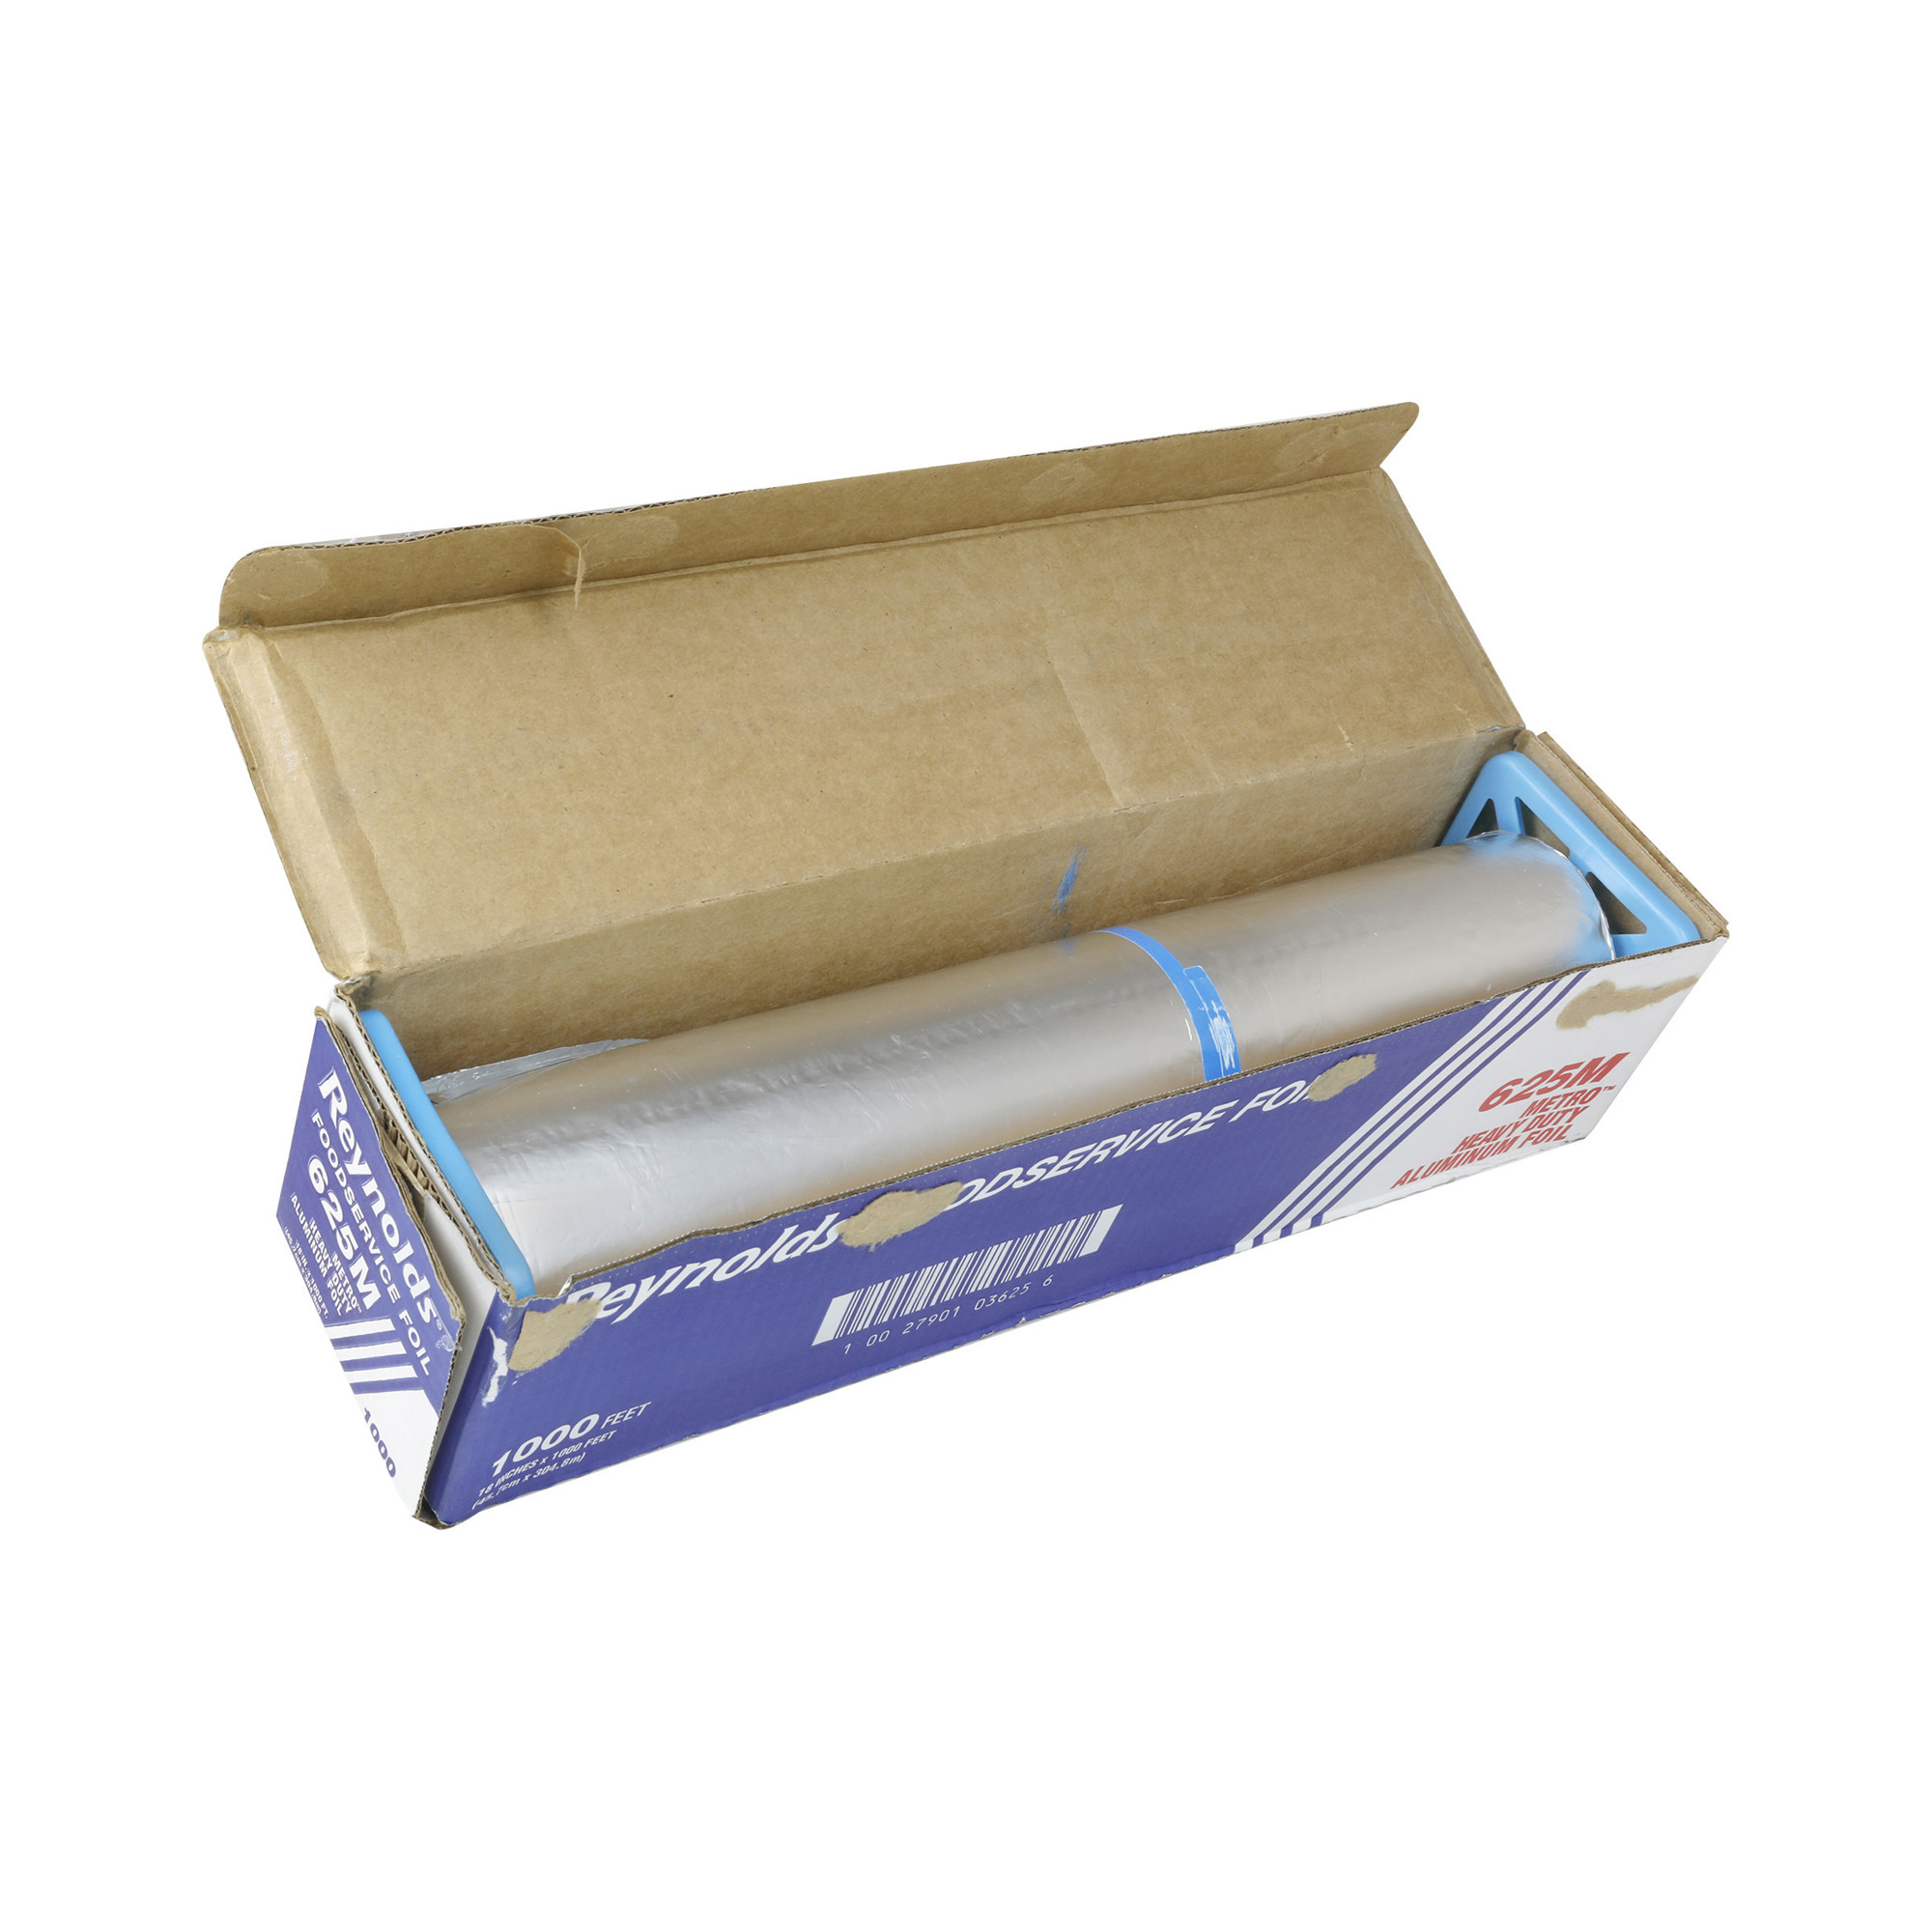 Dmc Products DMC 635346070426 25 ft. Perforated Non-Stick Aluminum Foil  Roll Premium Quality 635346070426